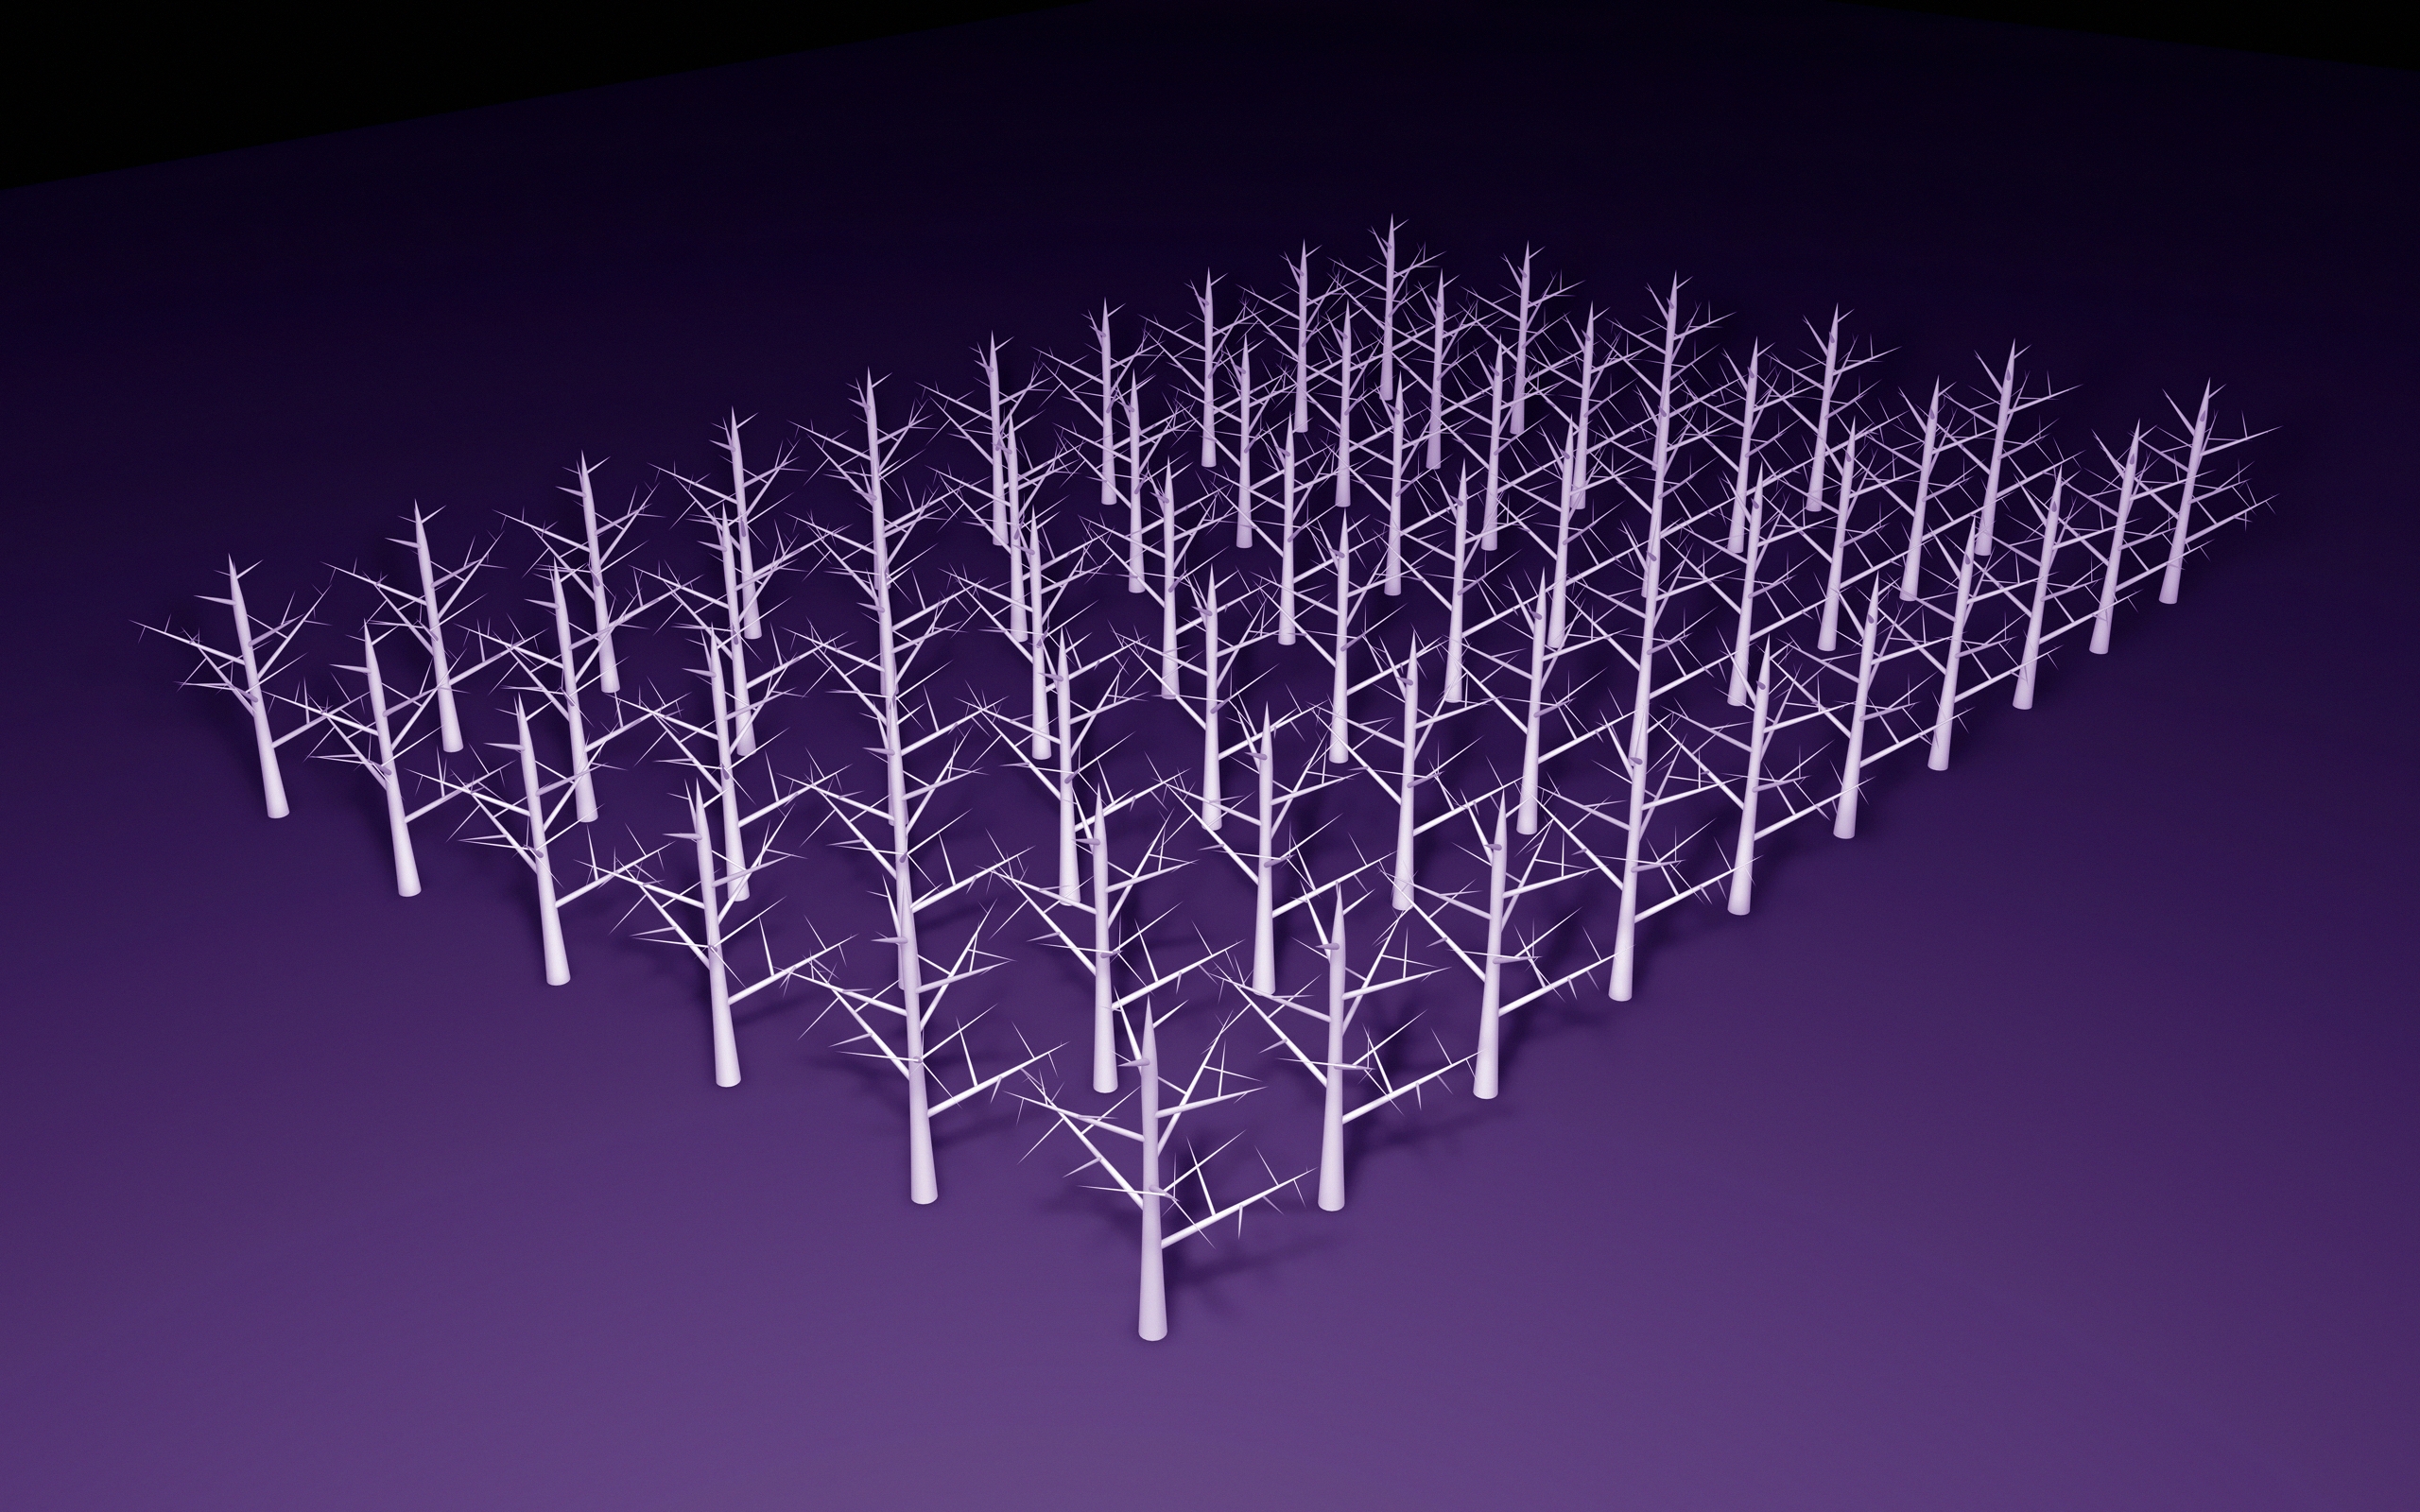 General 2560x1600 trees CGI digital art gradient purple background